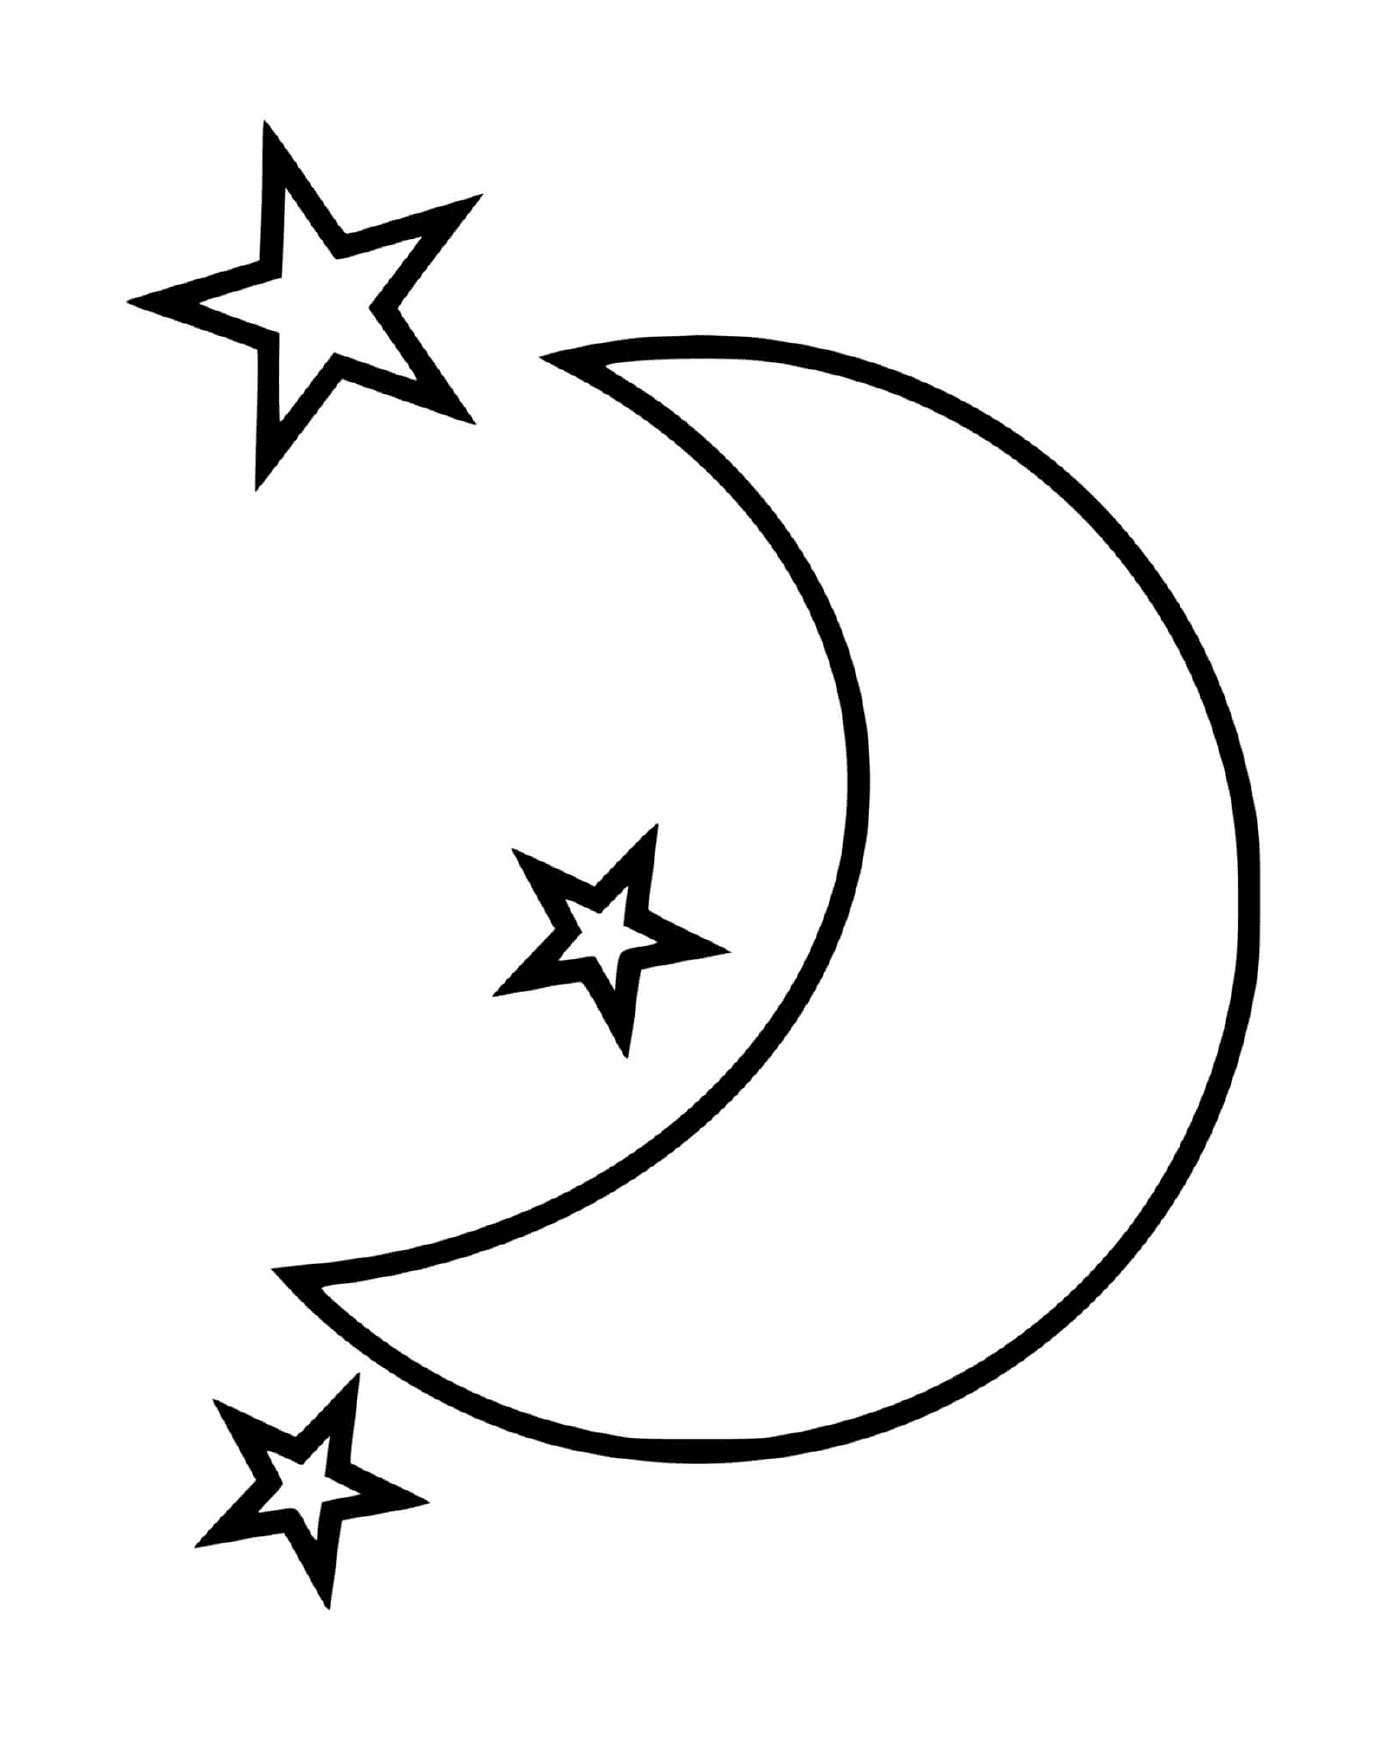  Moon crescent with three stars 